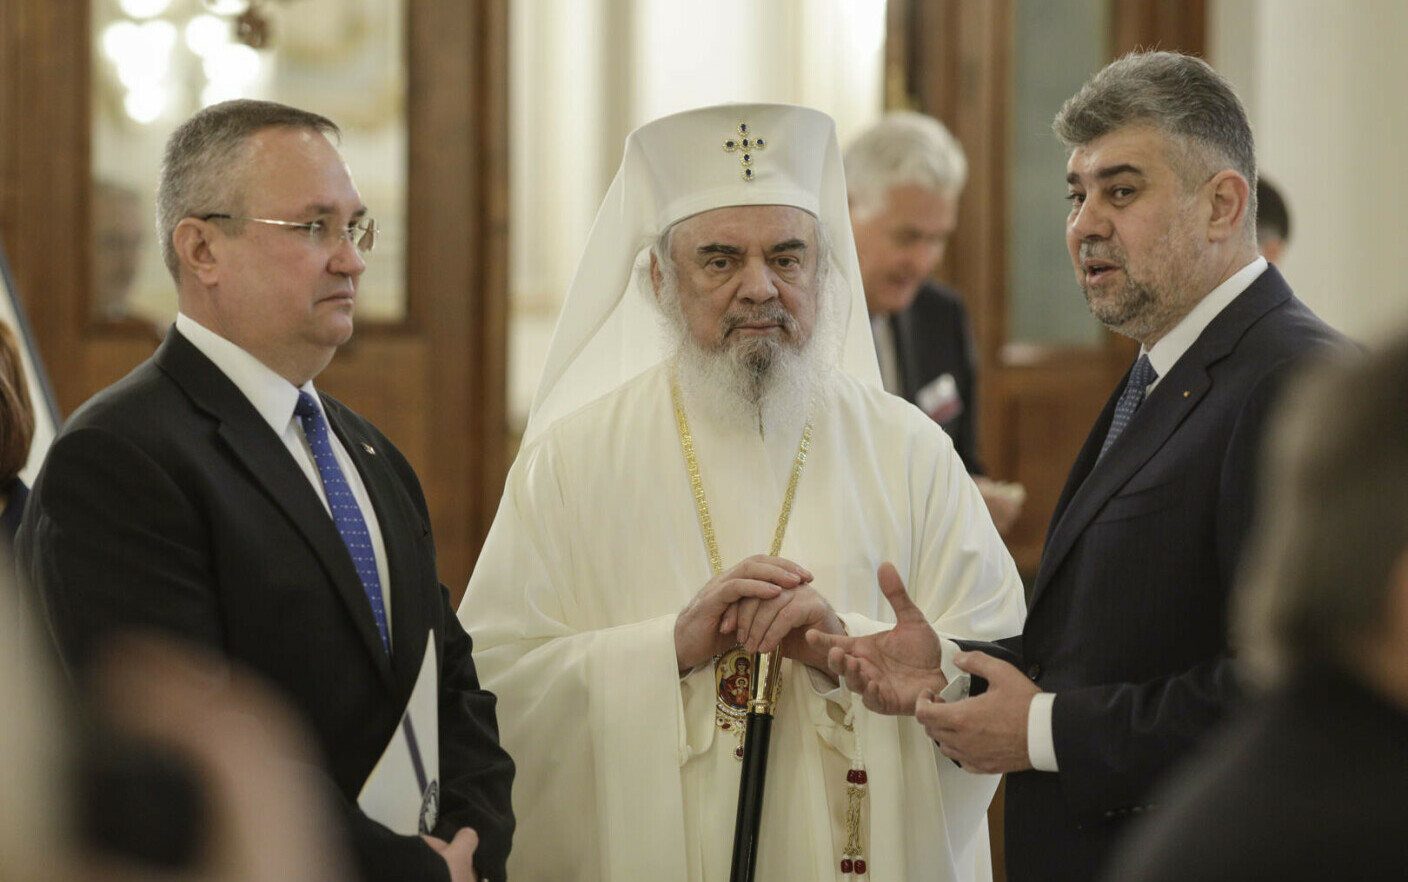 Patriarhul Daniel, Nicolae Ciuca, Marcel Ciolacu